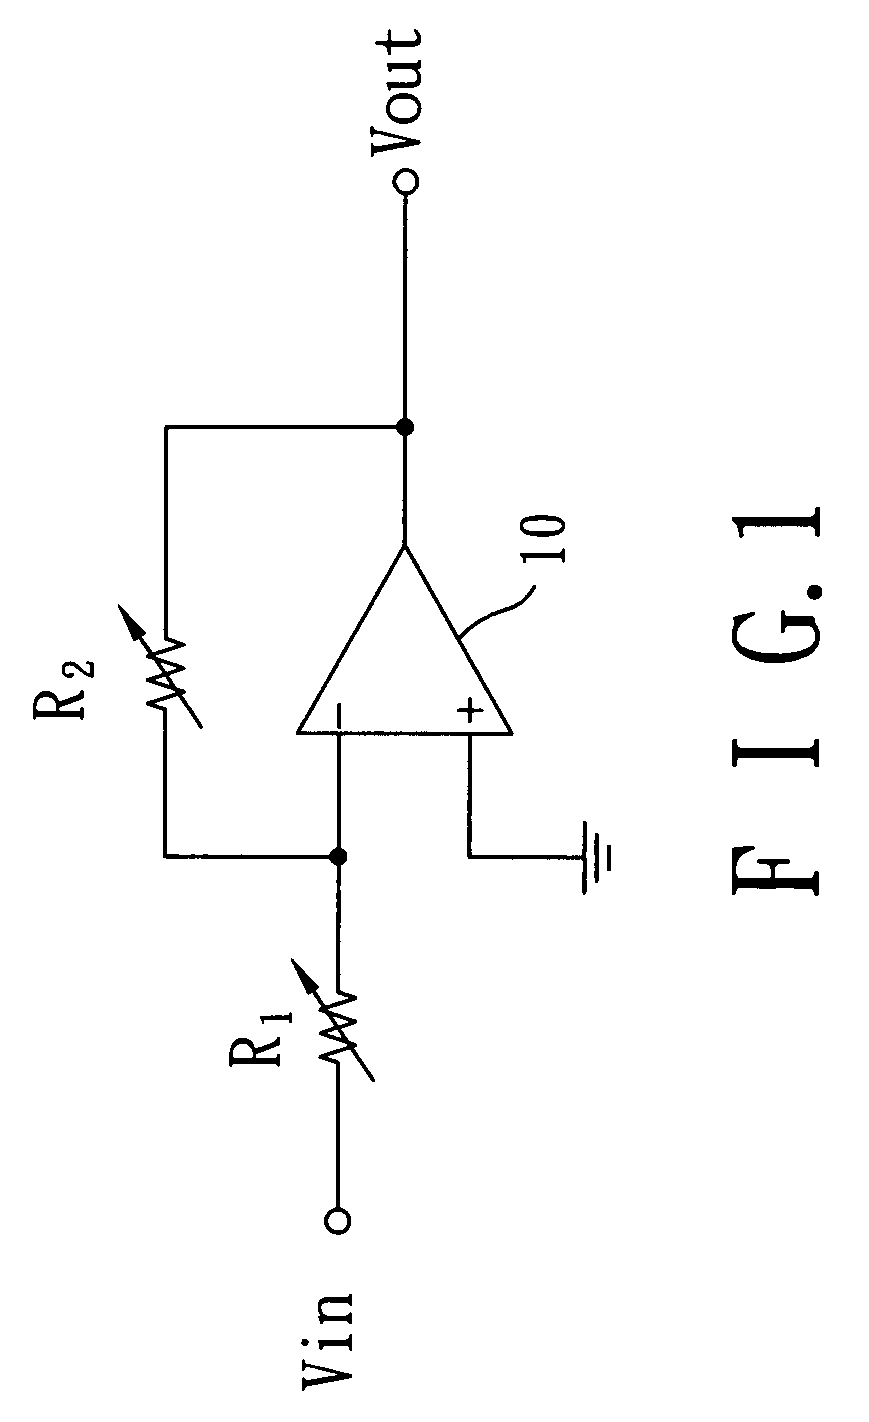 Variable gain amplifying circuit